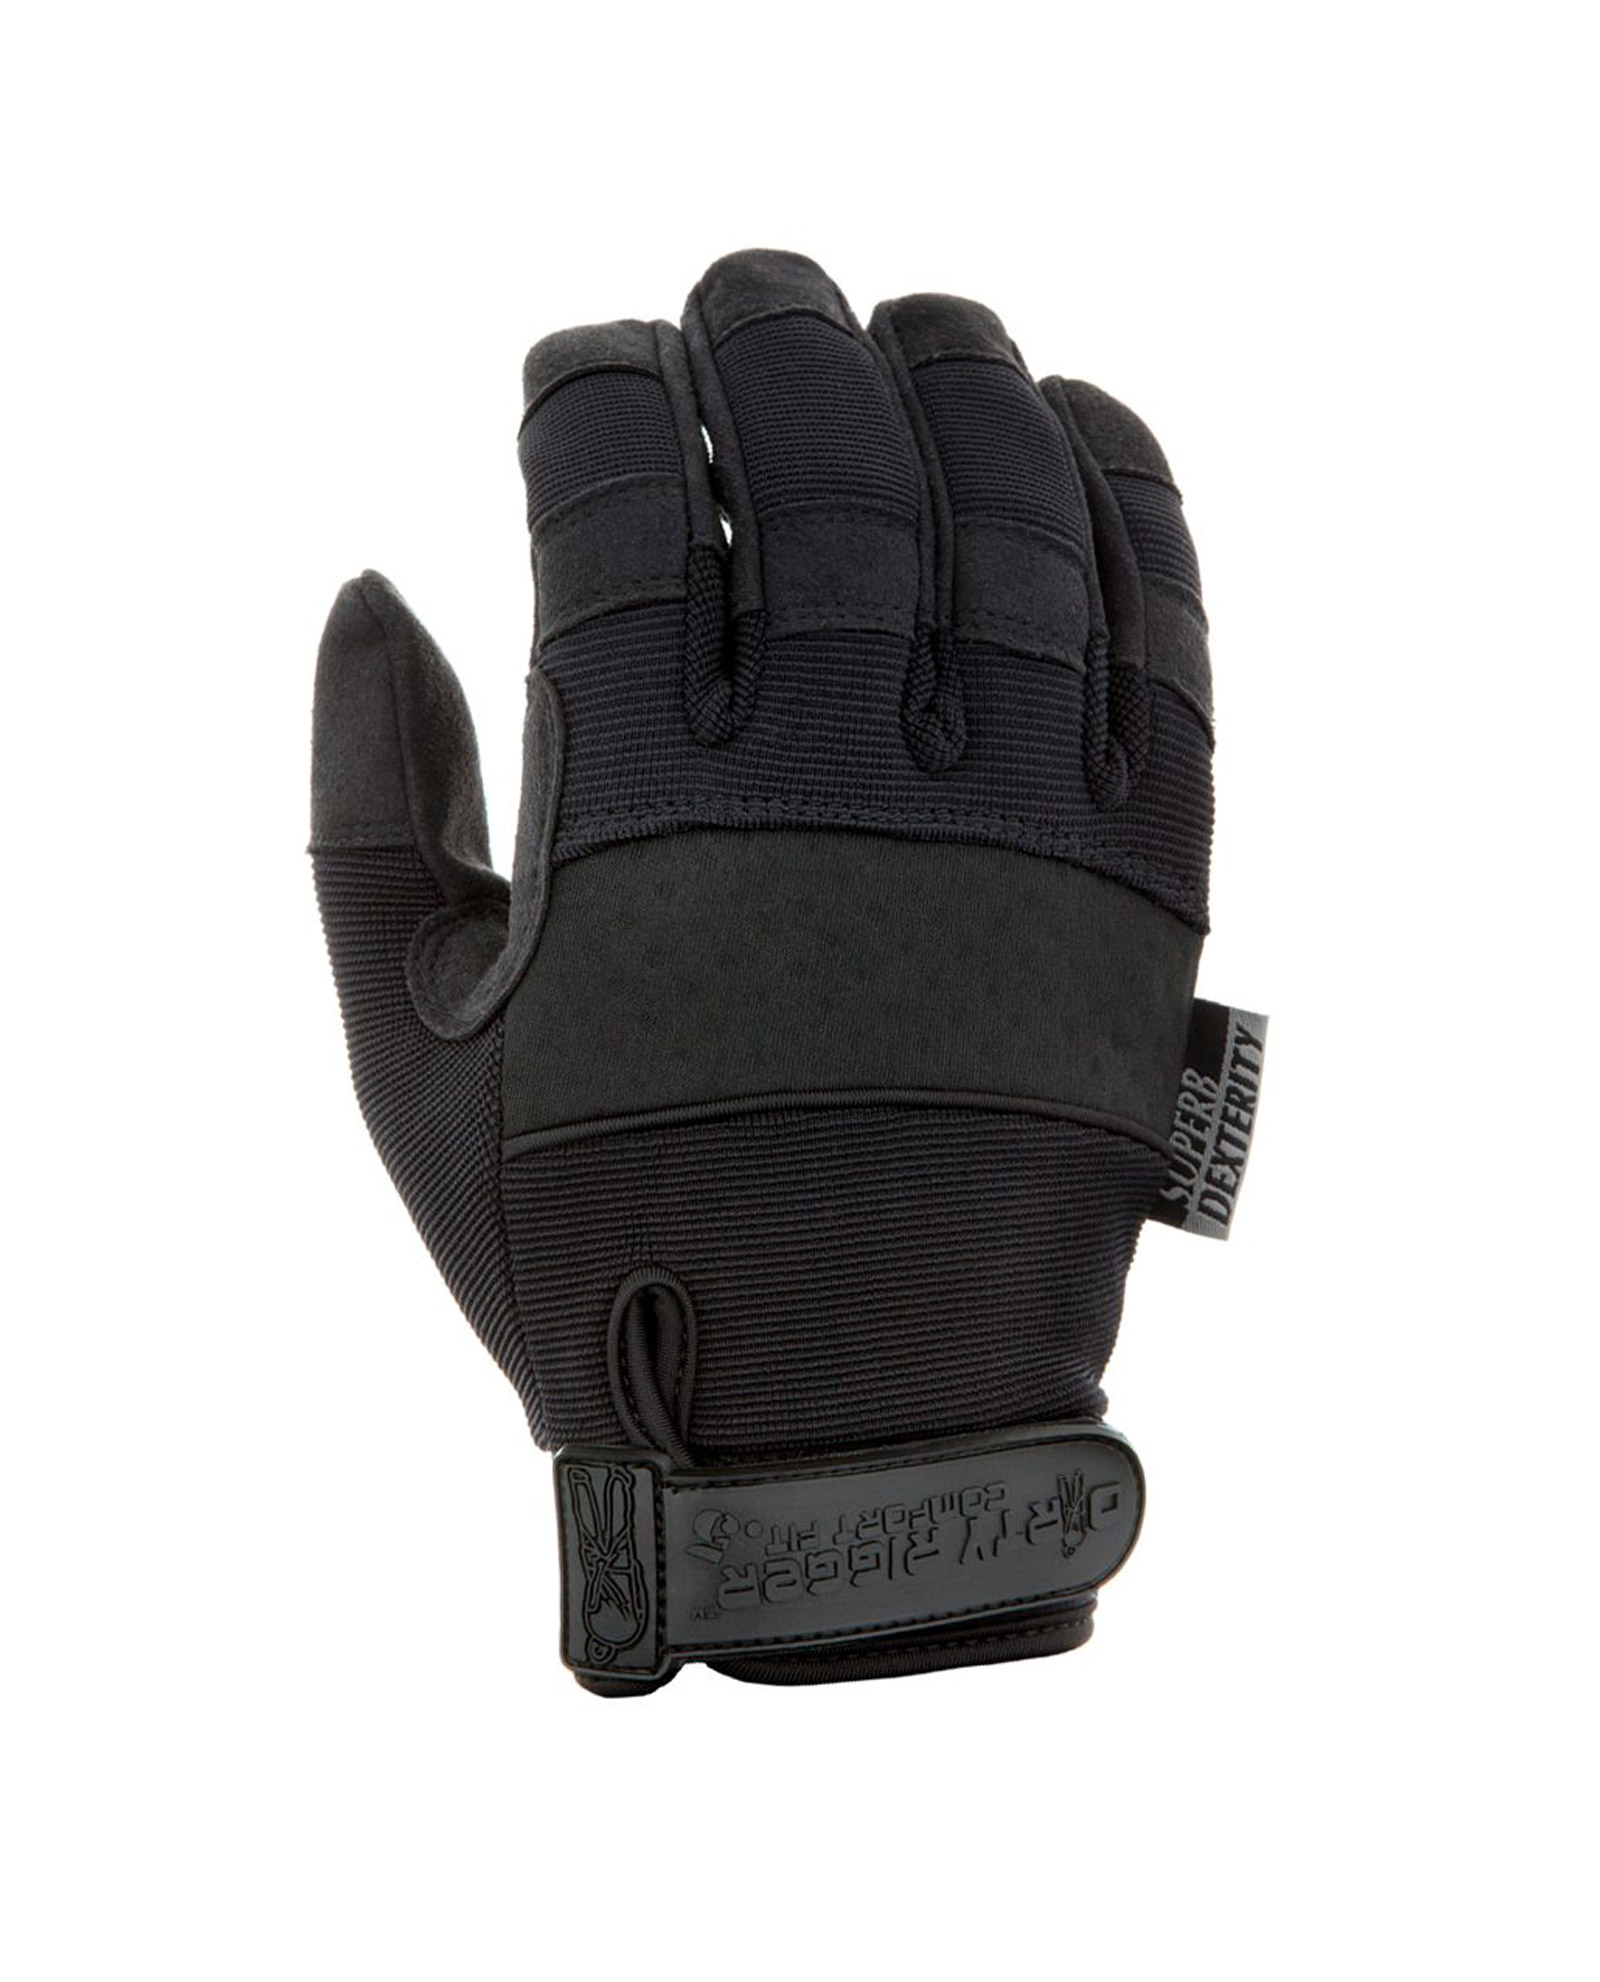 Dirty Rigger Glove Dty Comf0.5 Comfort Fit 0.5 High Dexterity Glove